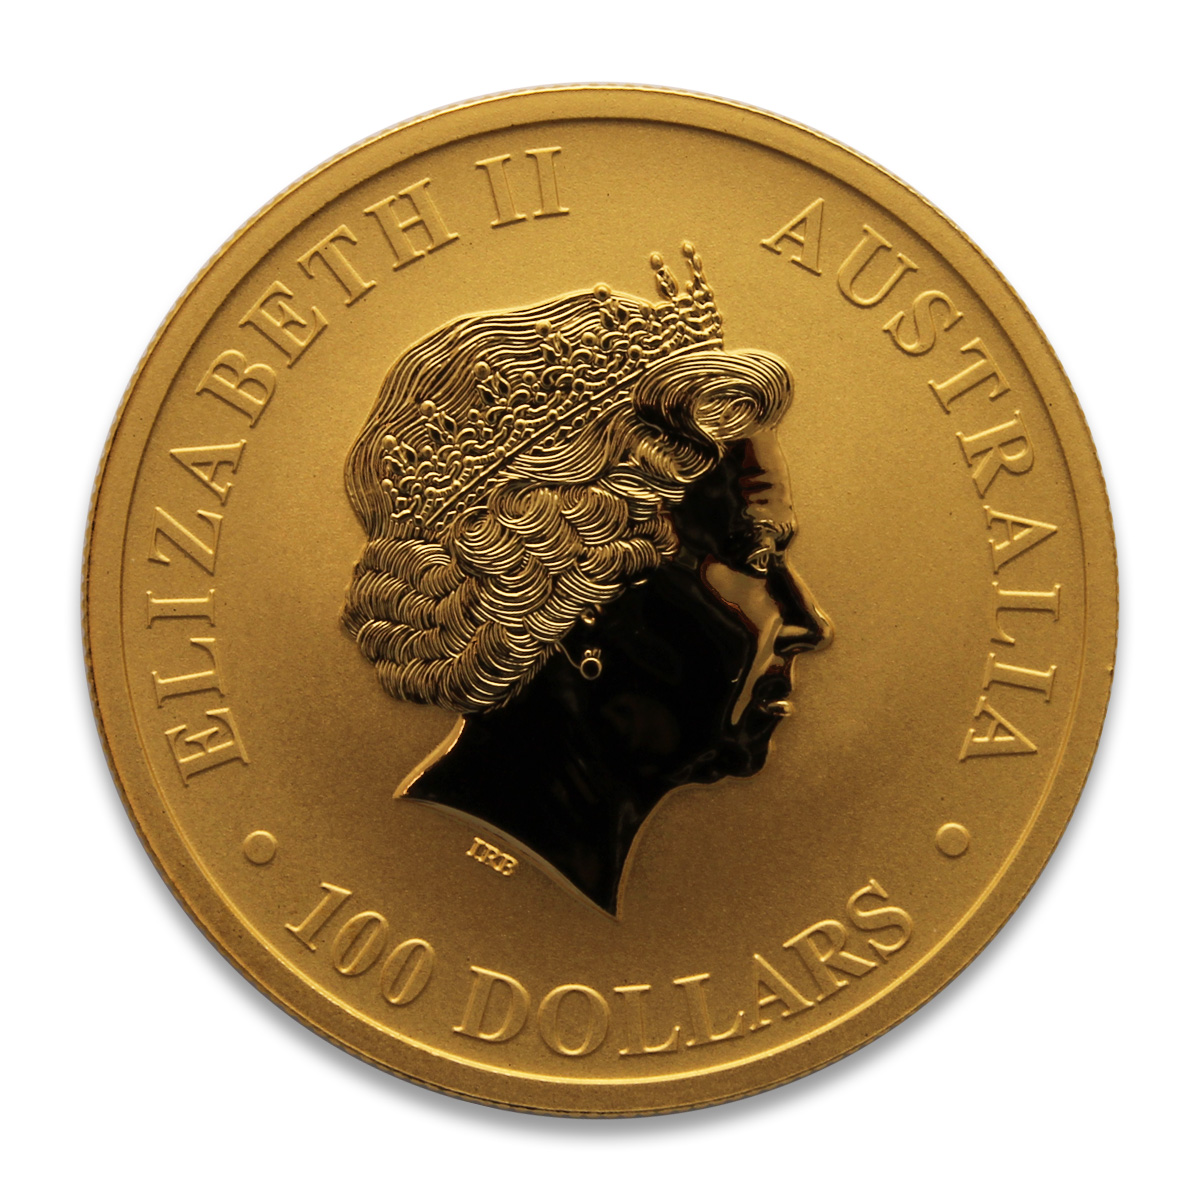 2013 1 oz Australian Nugget Gold Coin